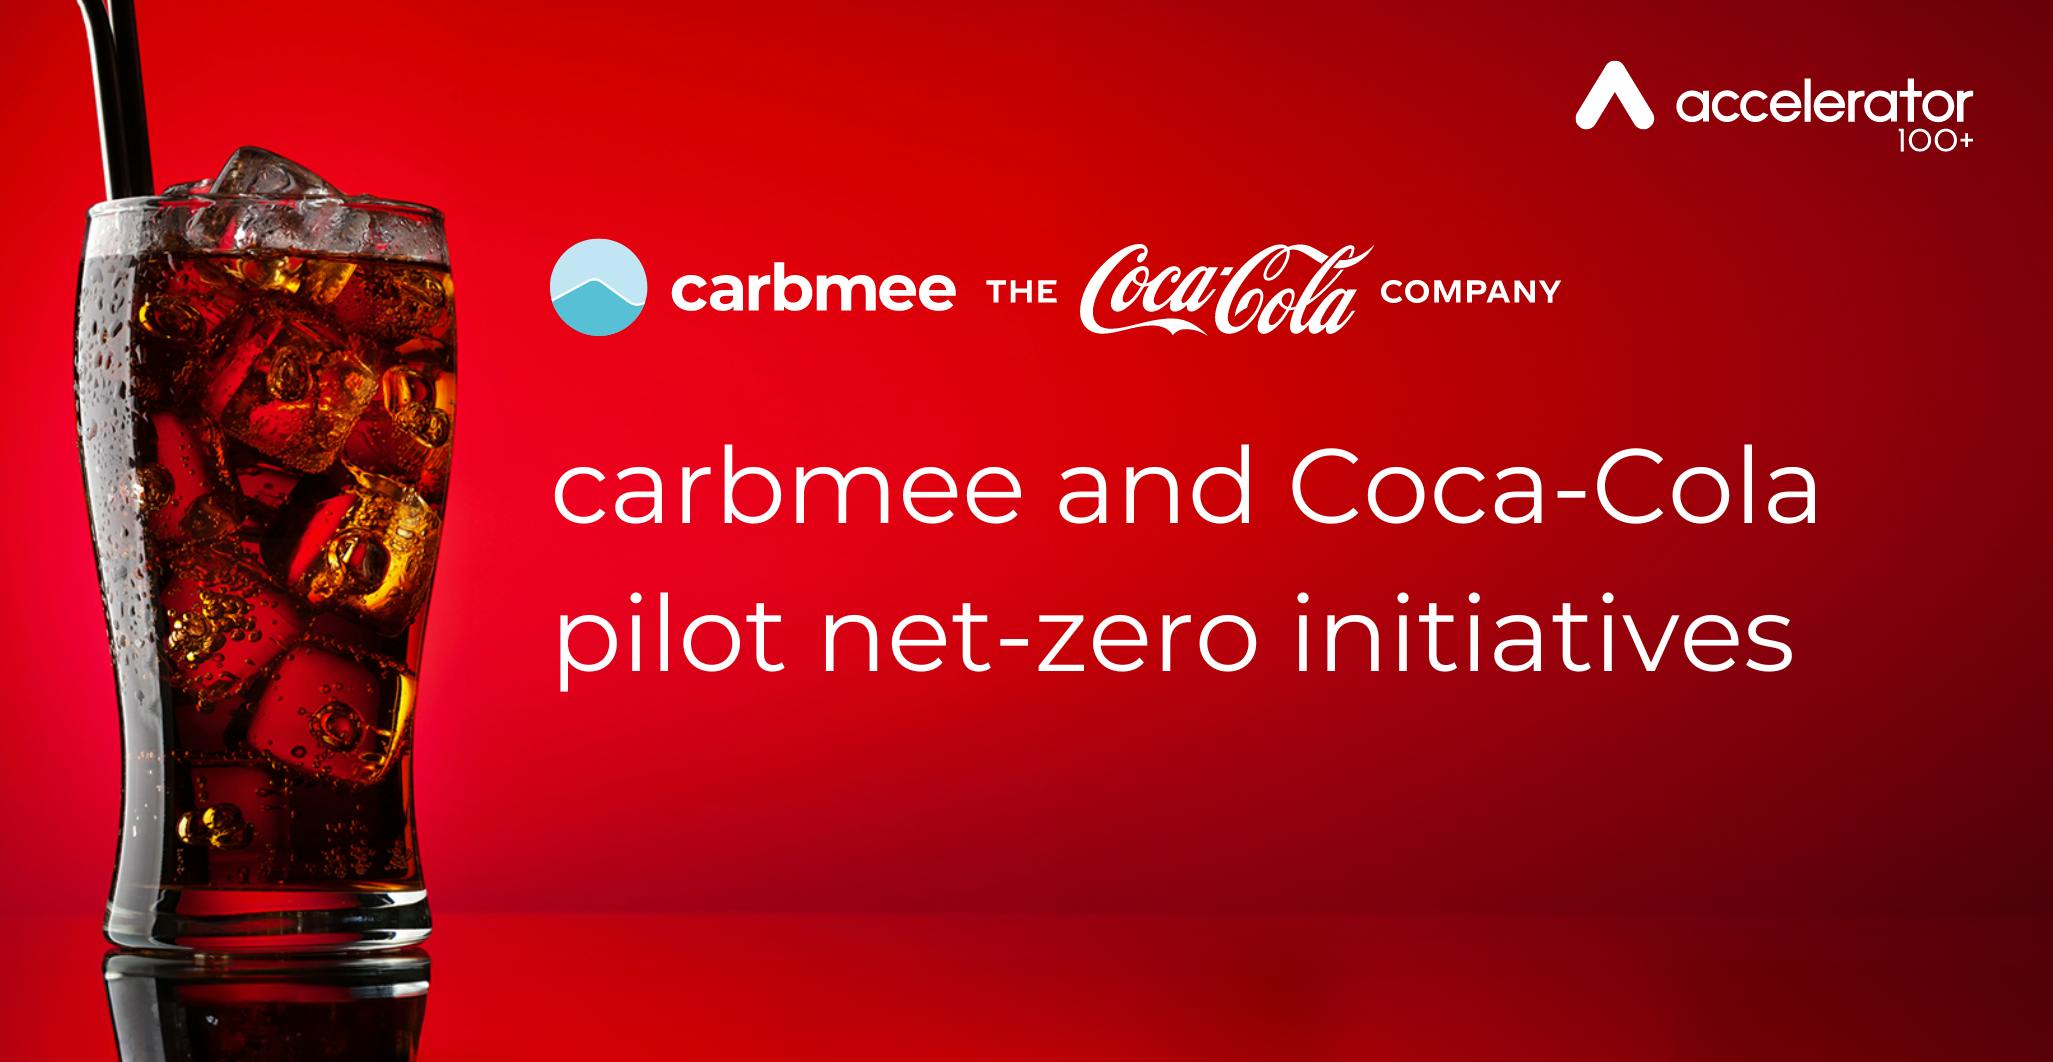 carbmee teams up with The Coca-Cola Company